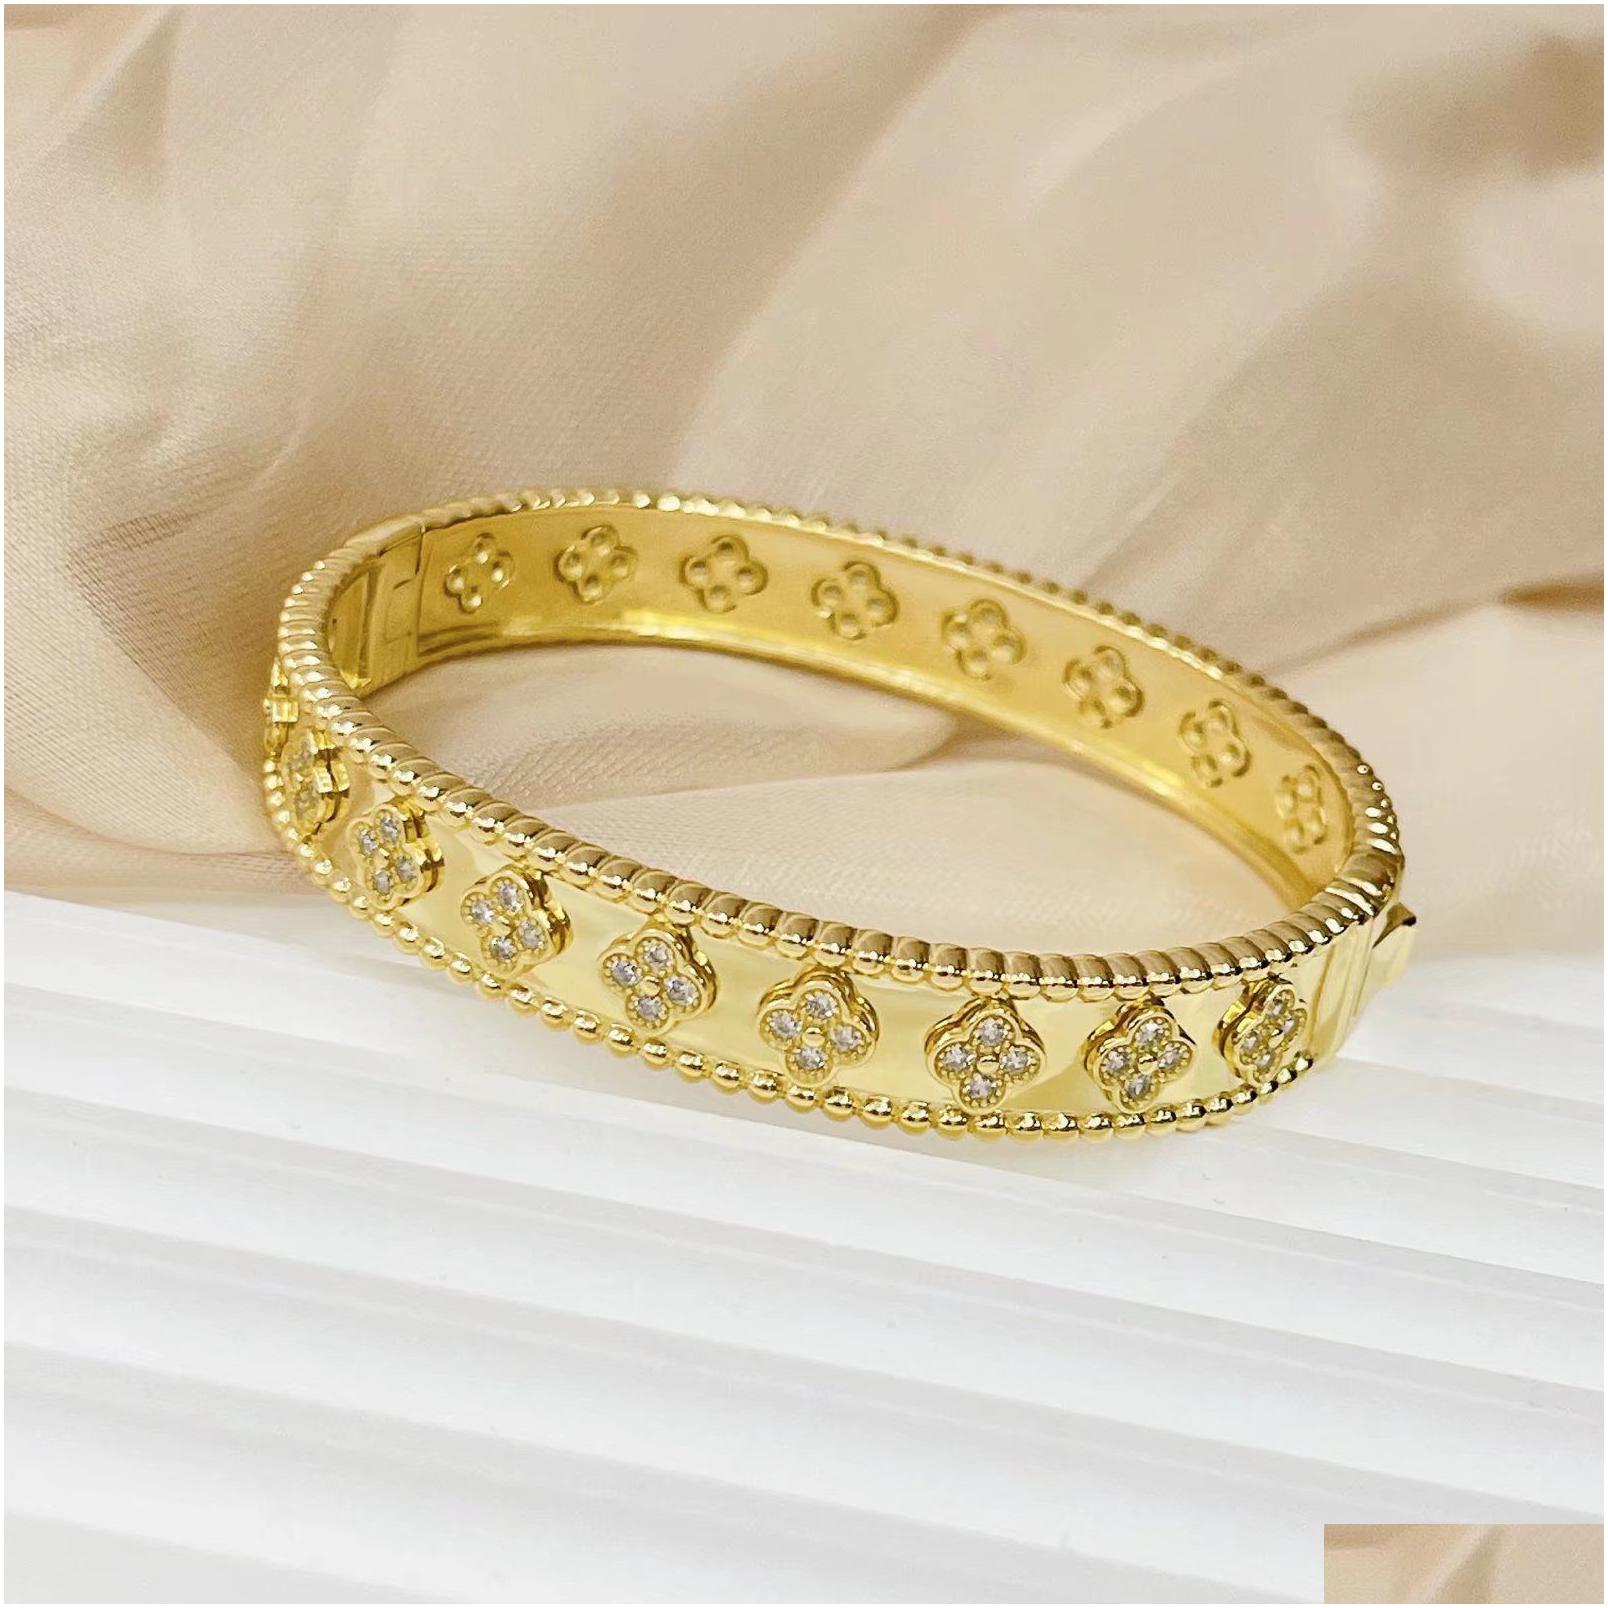 Bangle Gold Designer Bracelet Women Sweet Clovers Barclets المجوهرات المطلية بالفو